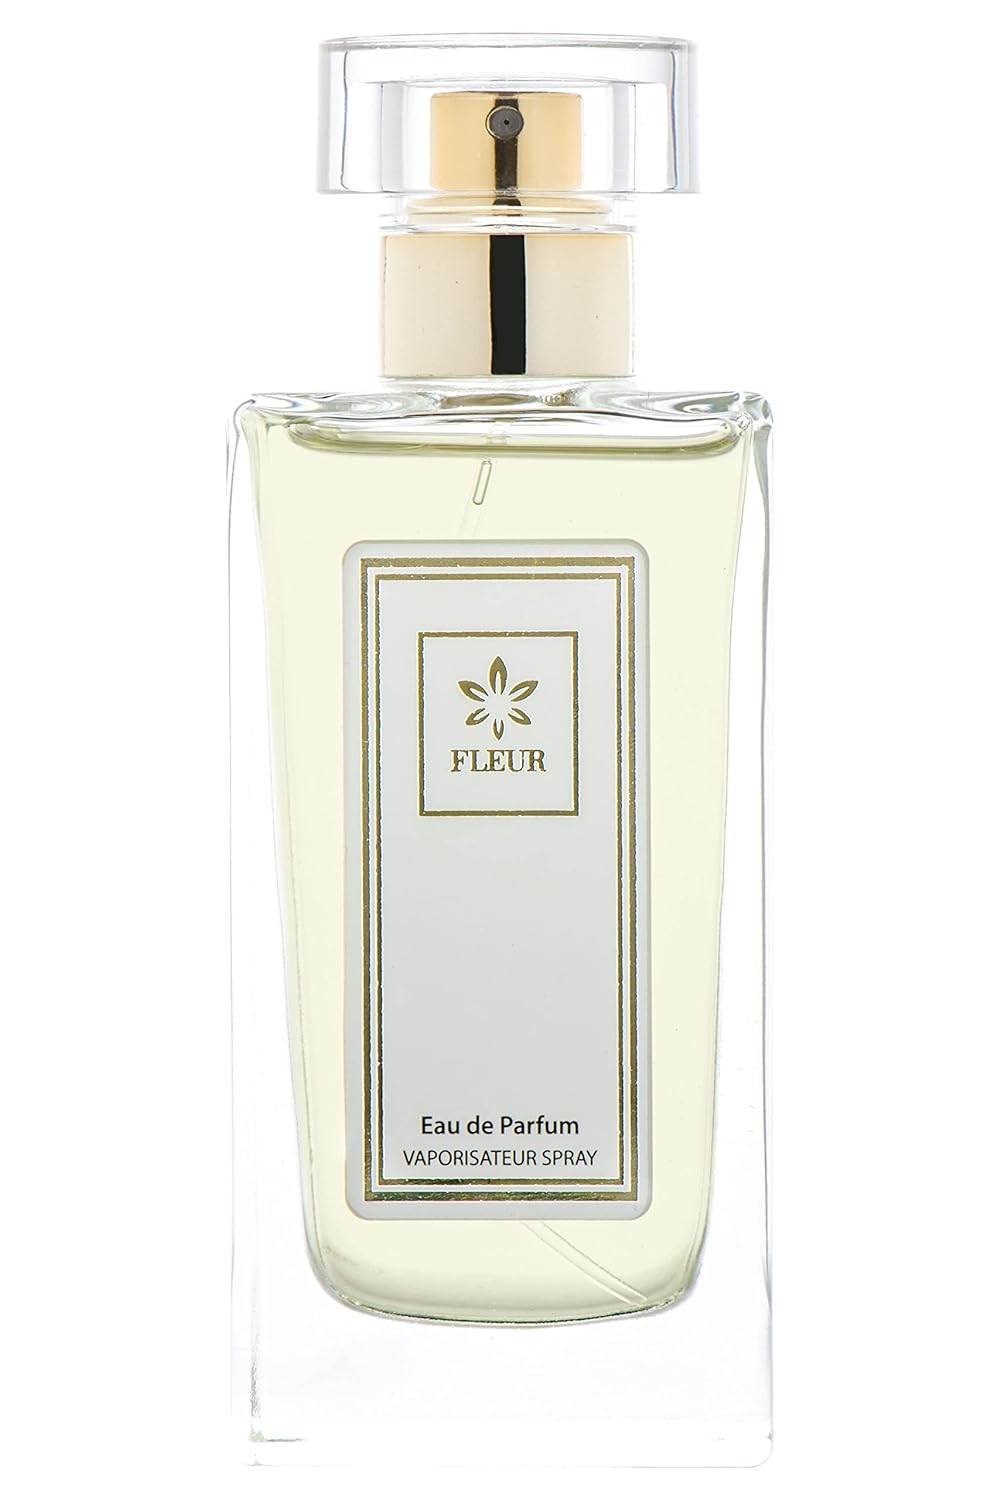 Fleur no 1119 Inspired by Venezia Parfum-Dupes, Women \ 's fragrance twins, Edp fragrance spray 50 ml